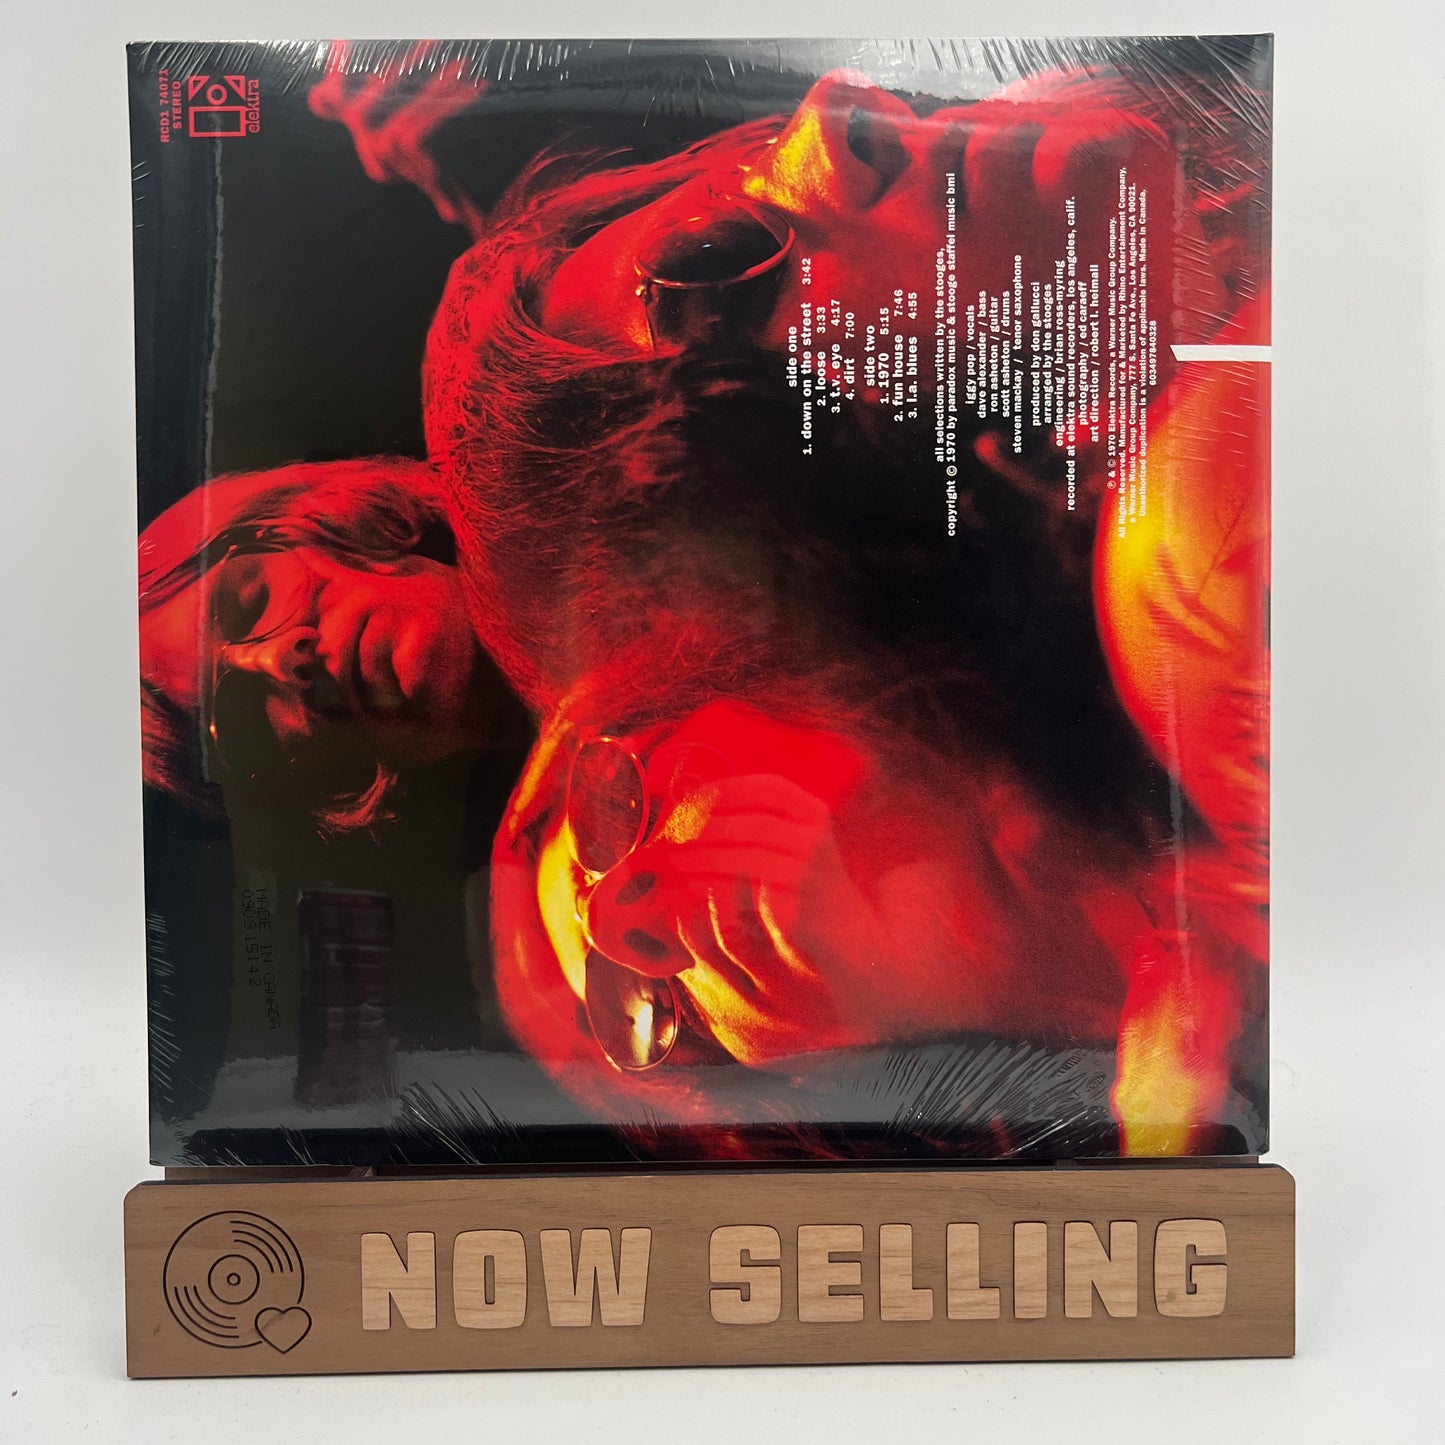 The Stooges - Fun House Vinyl LP Red / Black Split SEALED